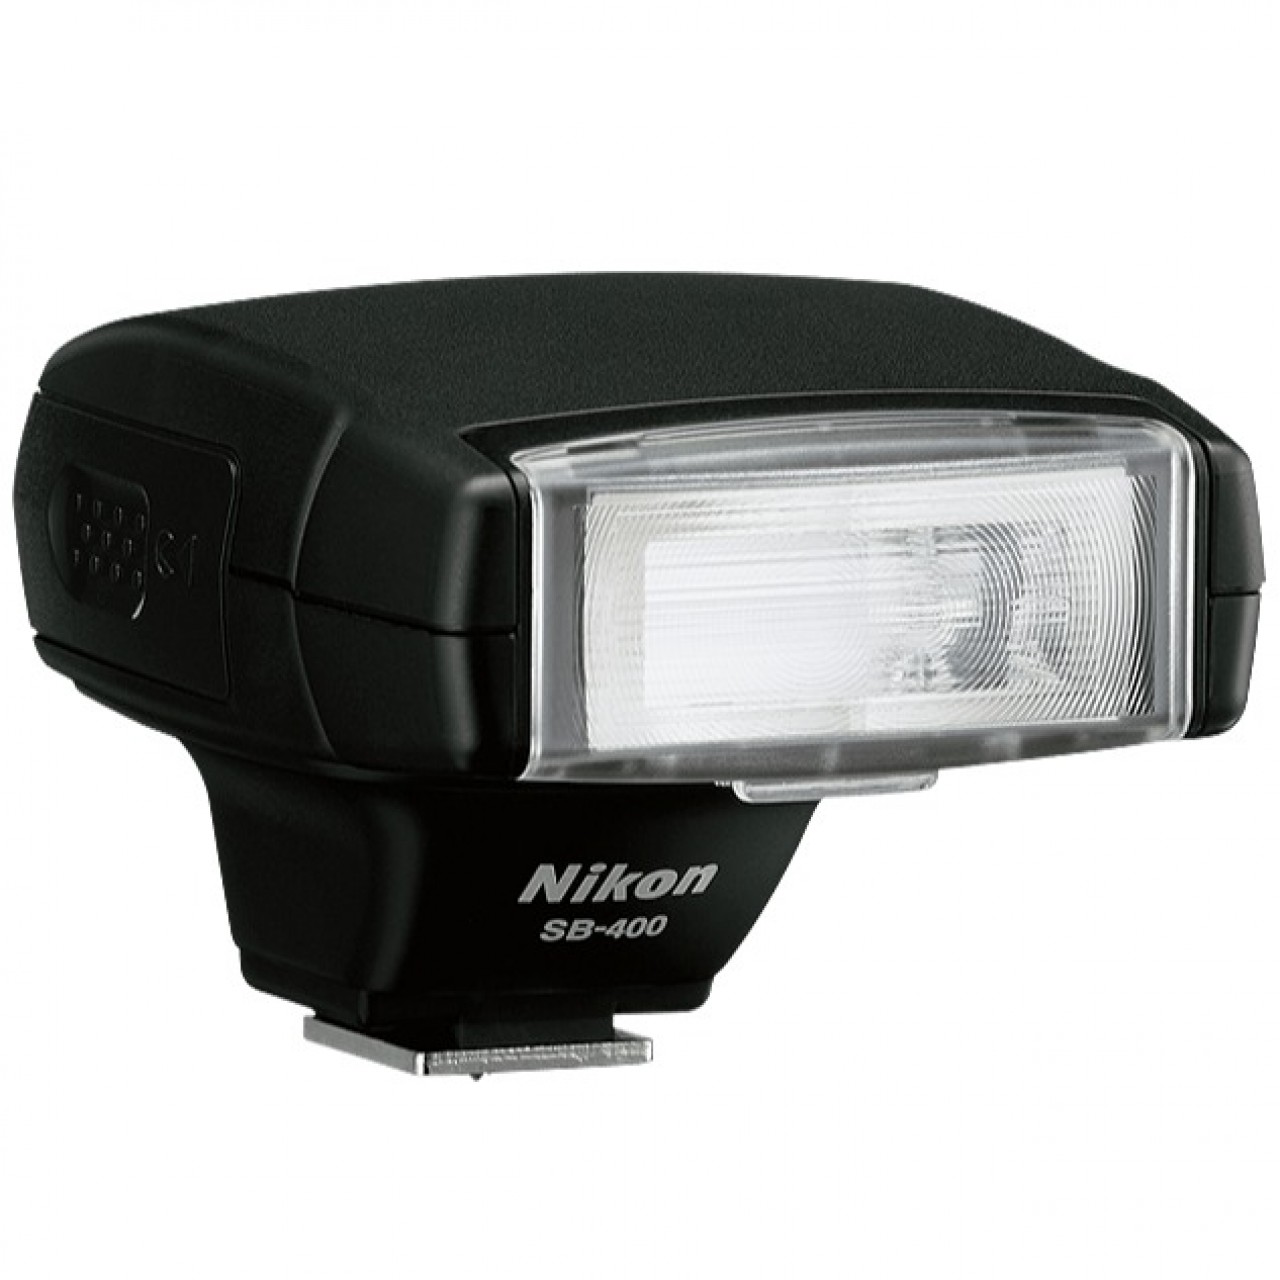 Nikon SB-400 AF Speedlight - Flashlight For Nikon DSLRs